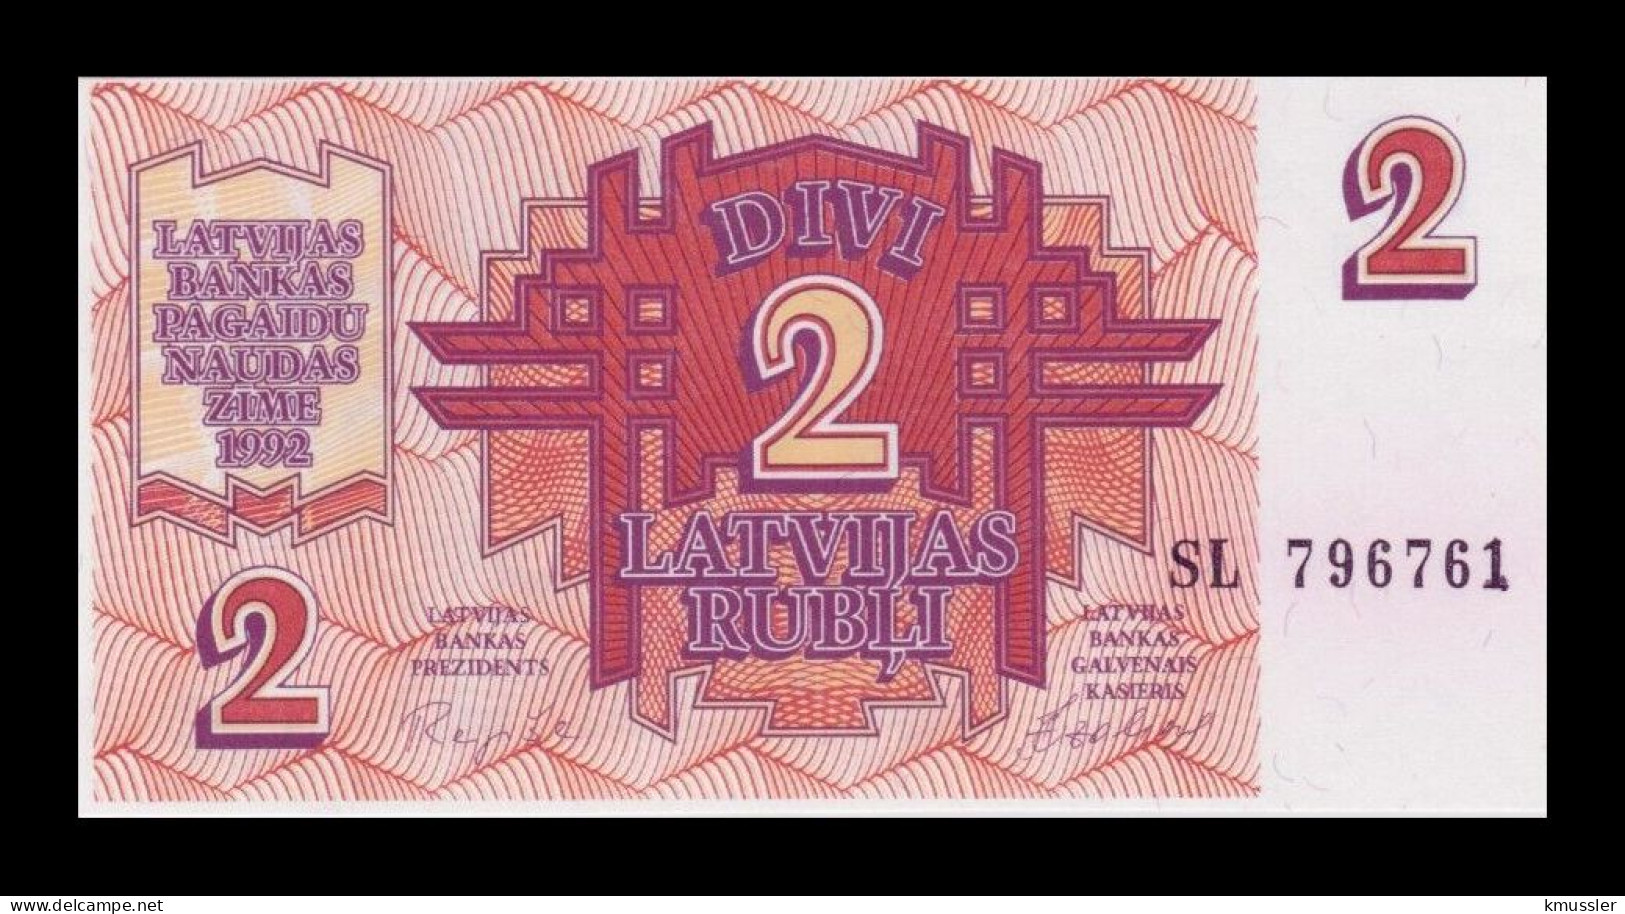 # # # Banknote Lettland (Latvijas) 2 Rubel (Rublis) 1992 UNC # # # - Letonia